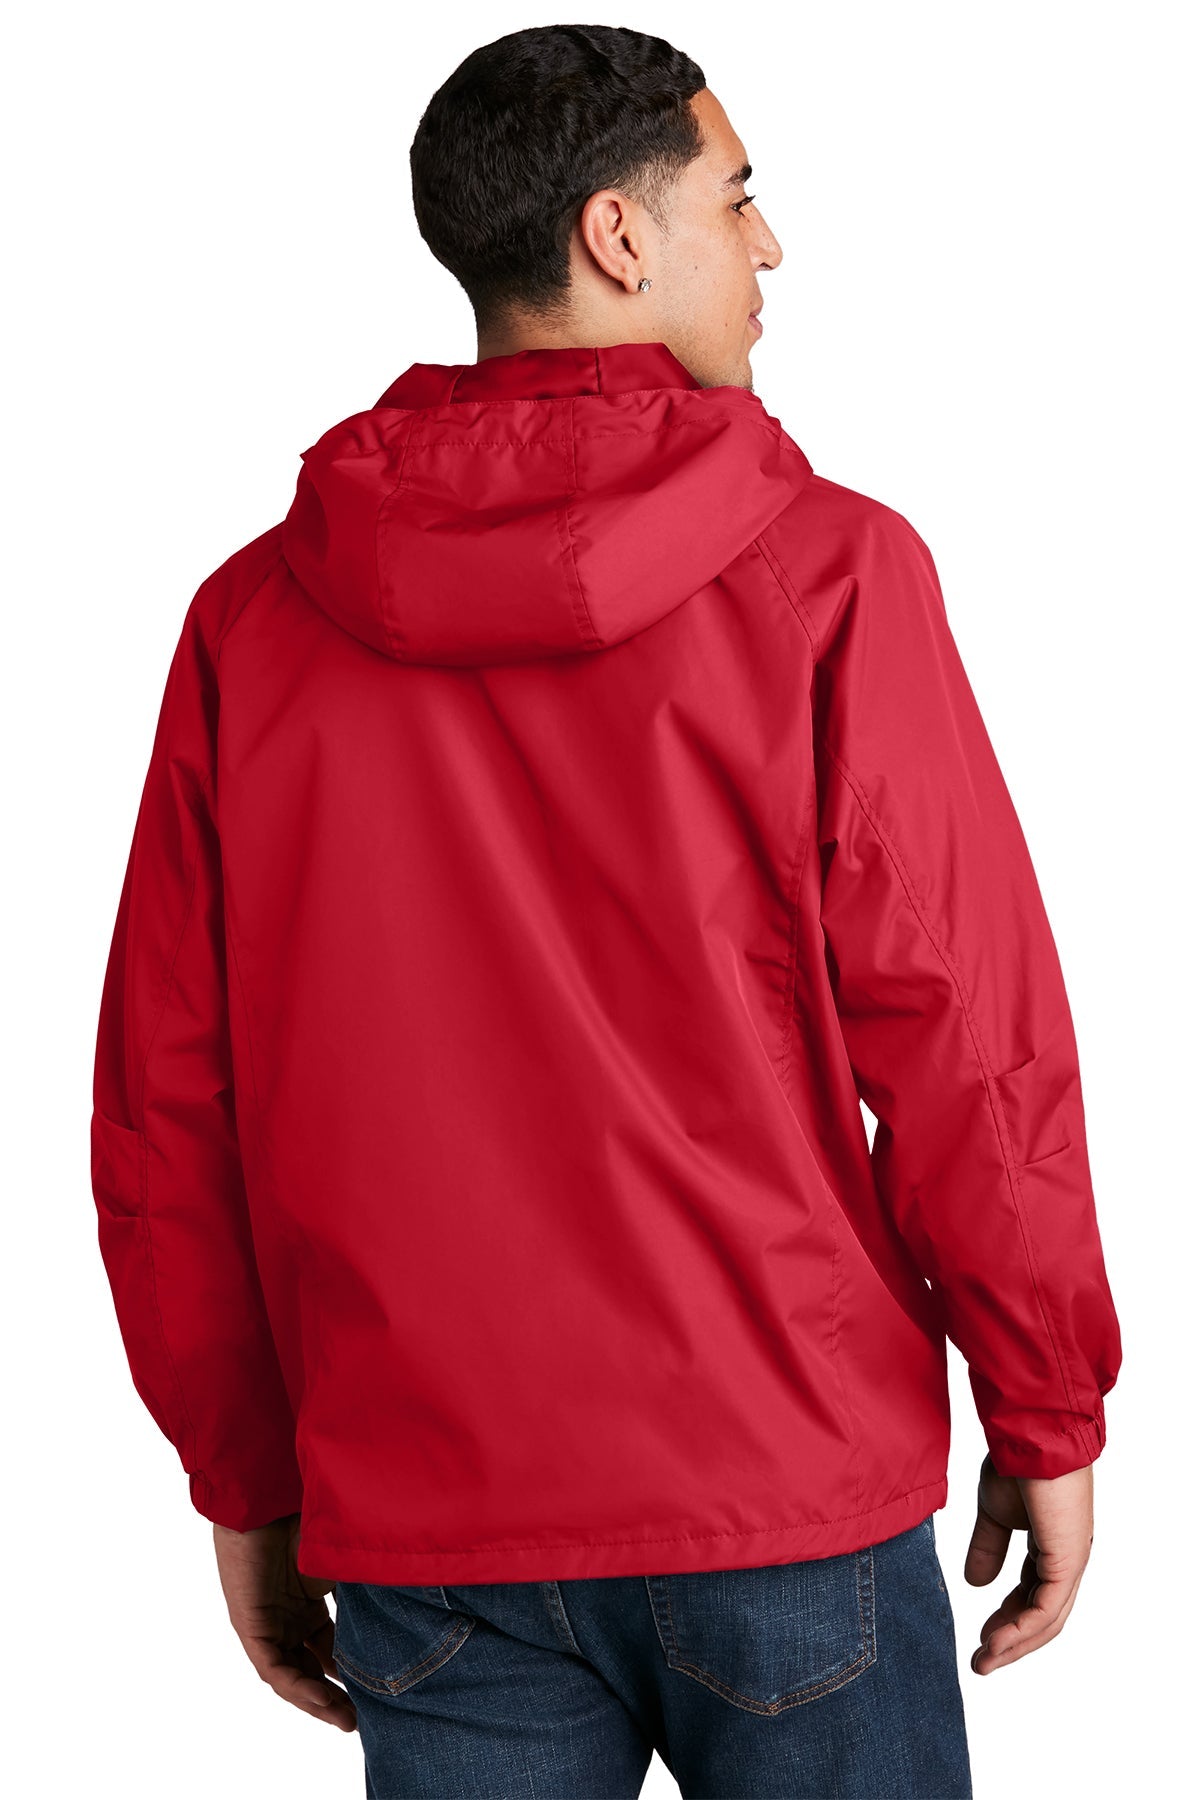 sport-tek_jst73 _true red_company_logo_jackets